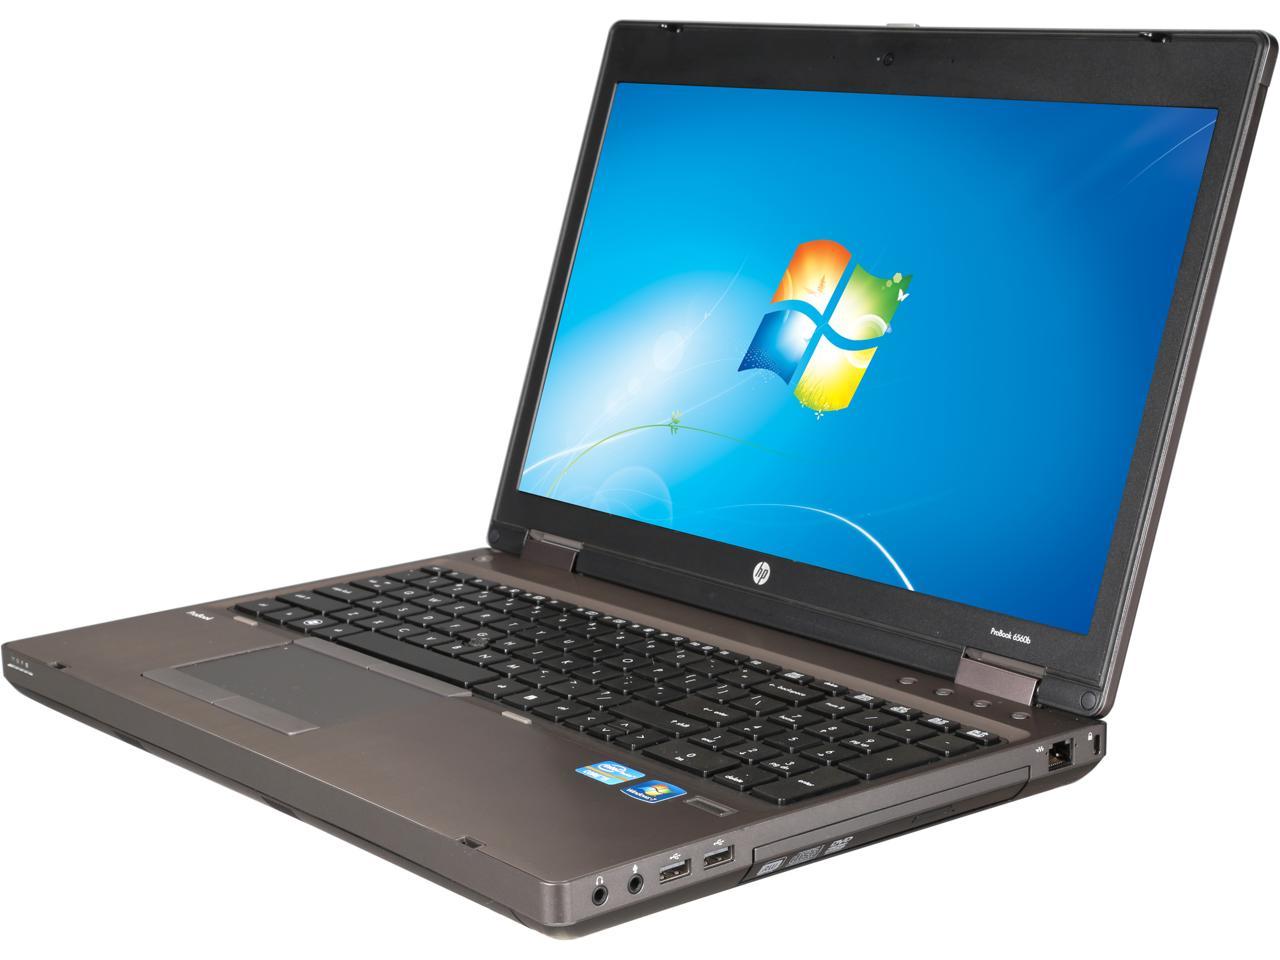 Refurbished Hp Laptop Probook Intel Core I5 2540m 4gb Memory 320gb Hdd Intel Hd Graphics 3000 5295